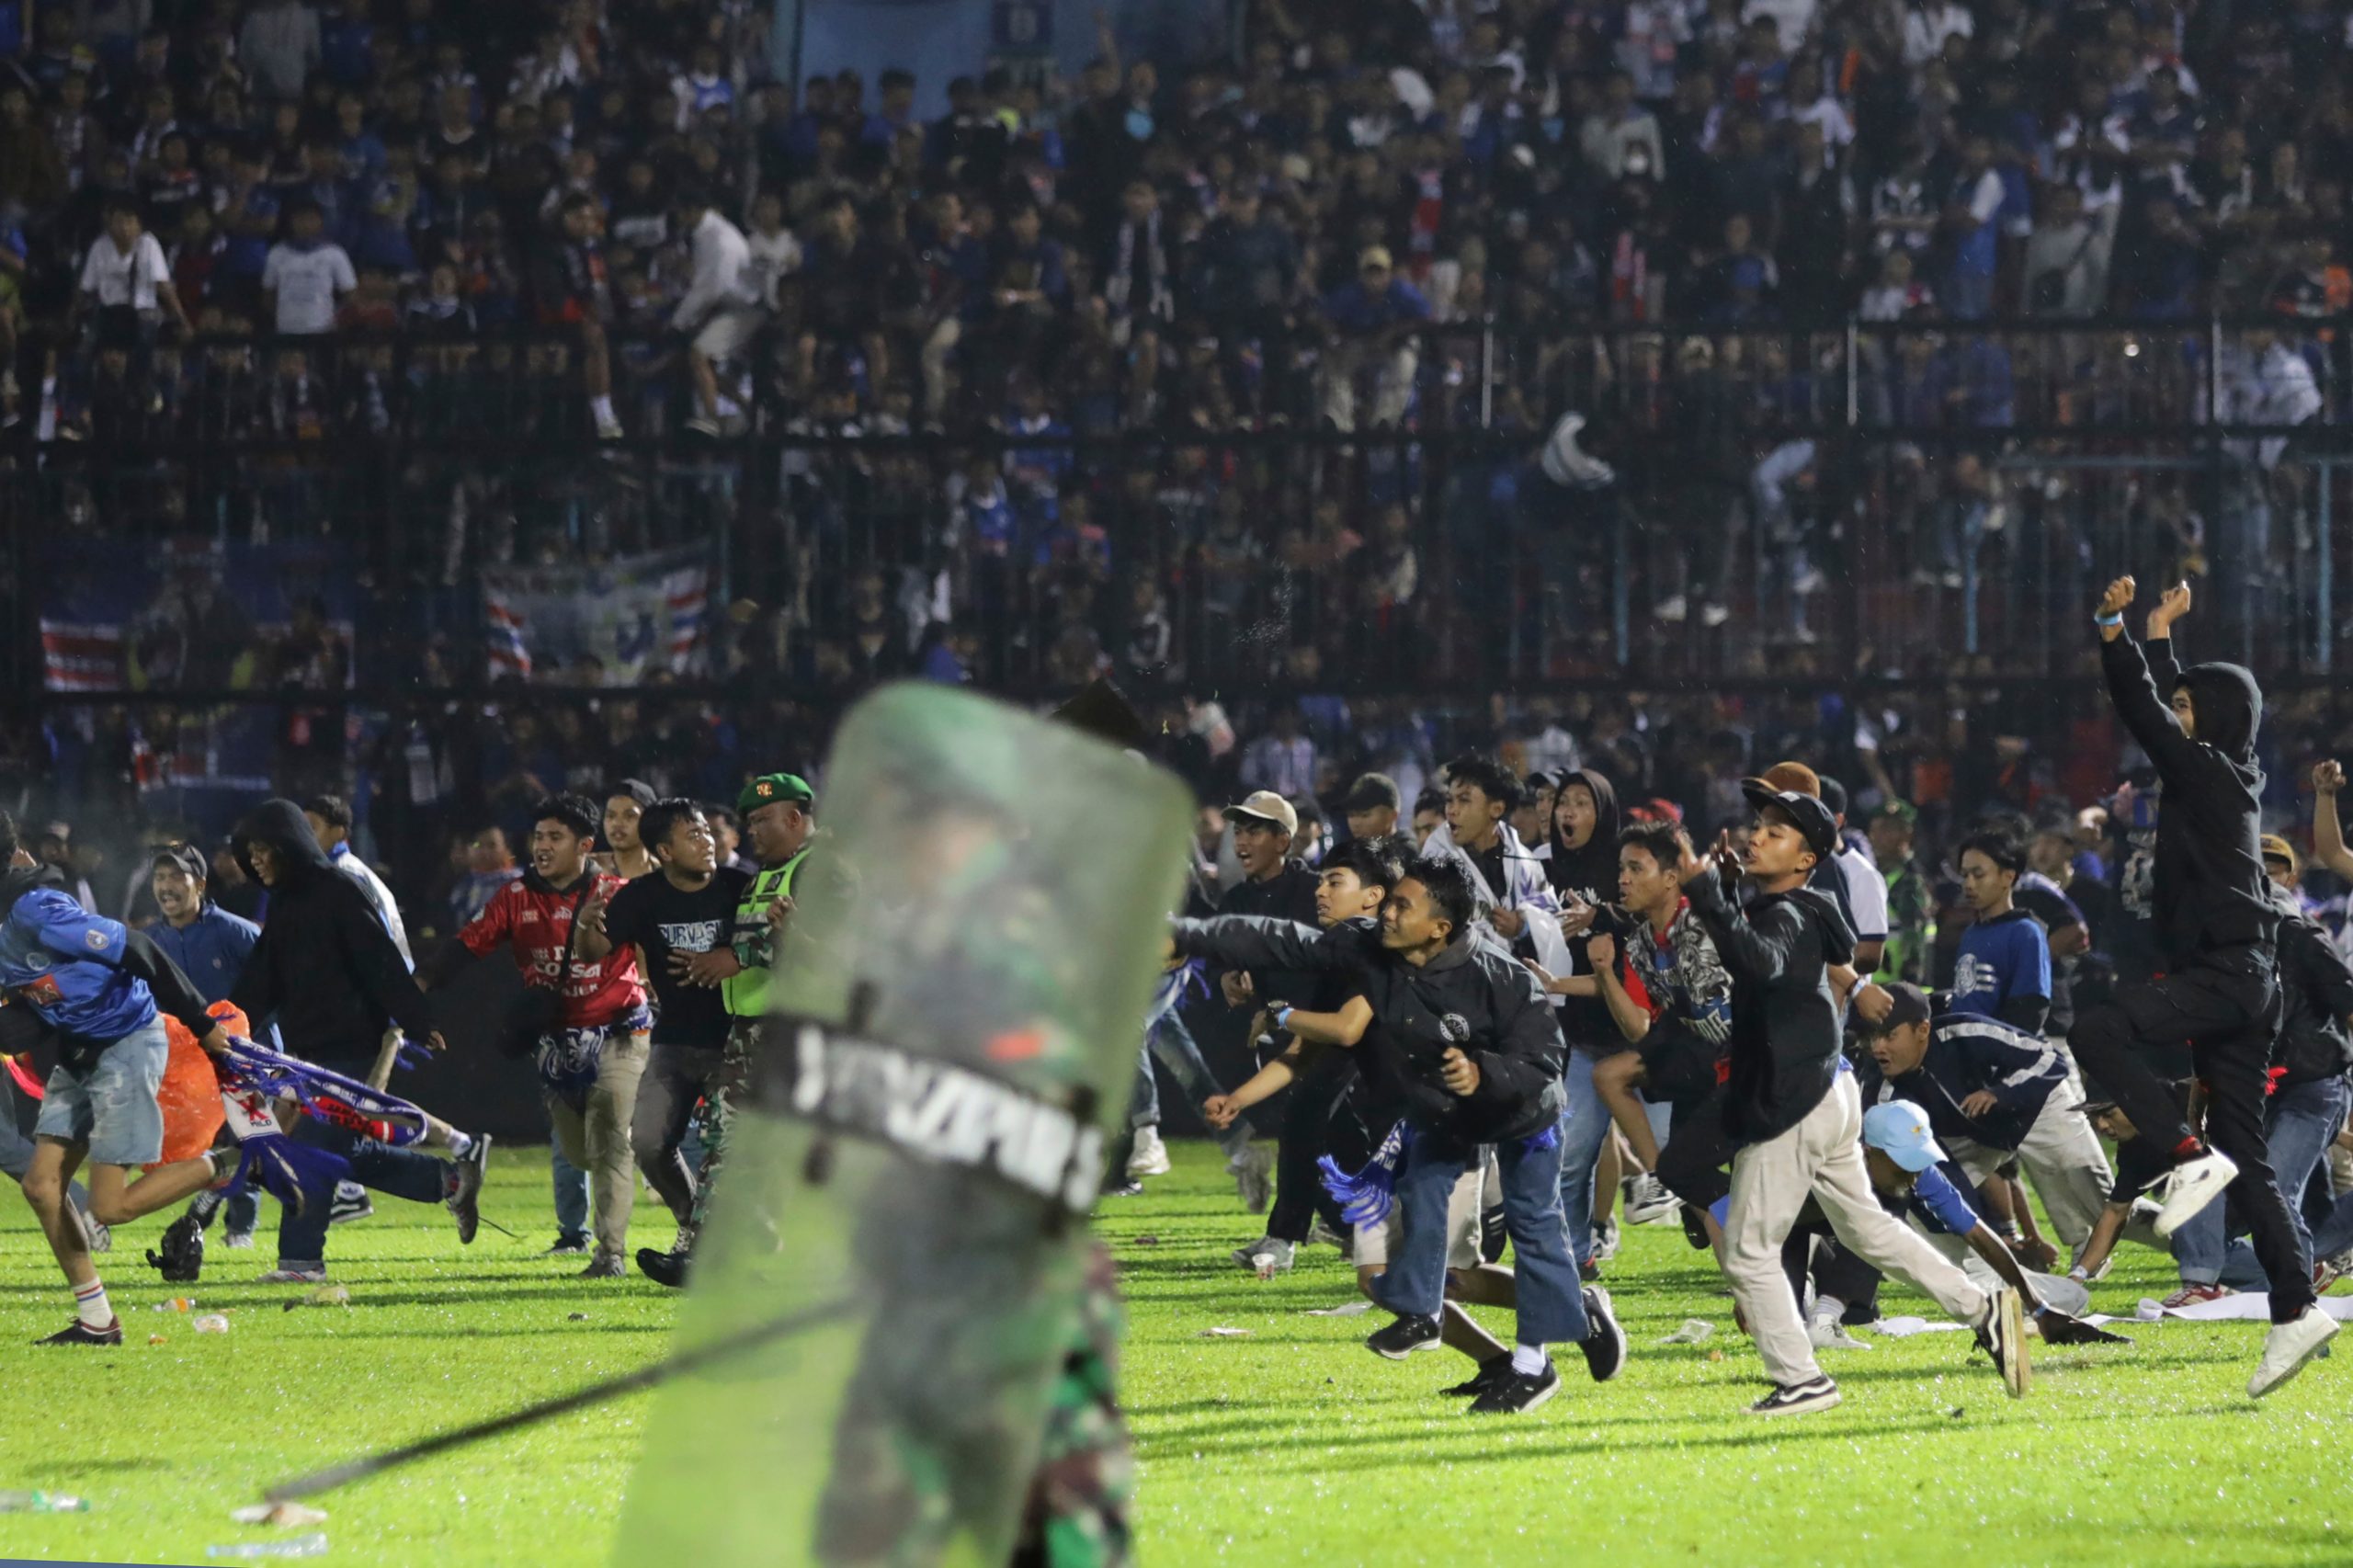 Indonesia Kanjuruhan Stadium stampede: BRI Liga 1 football games suspended for a week